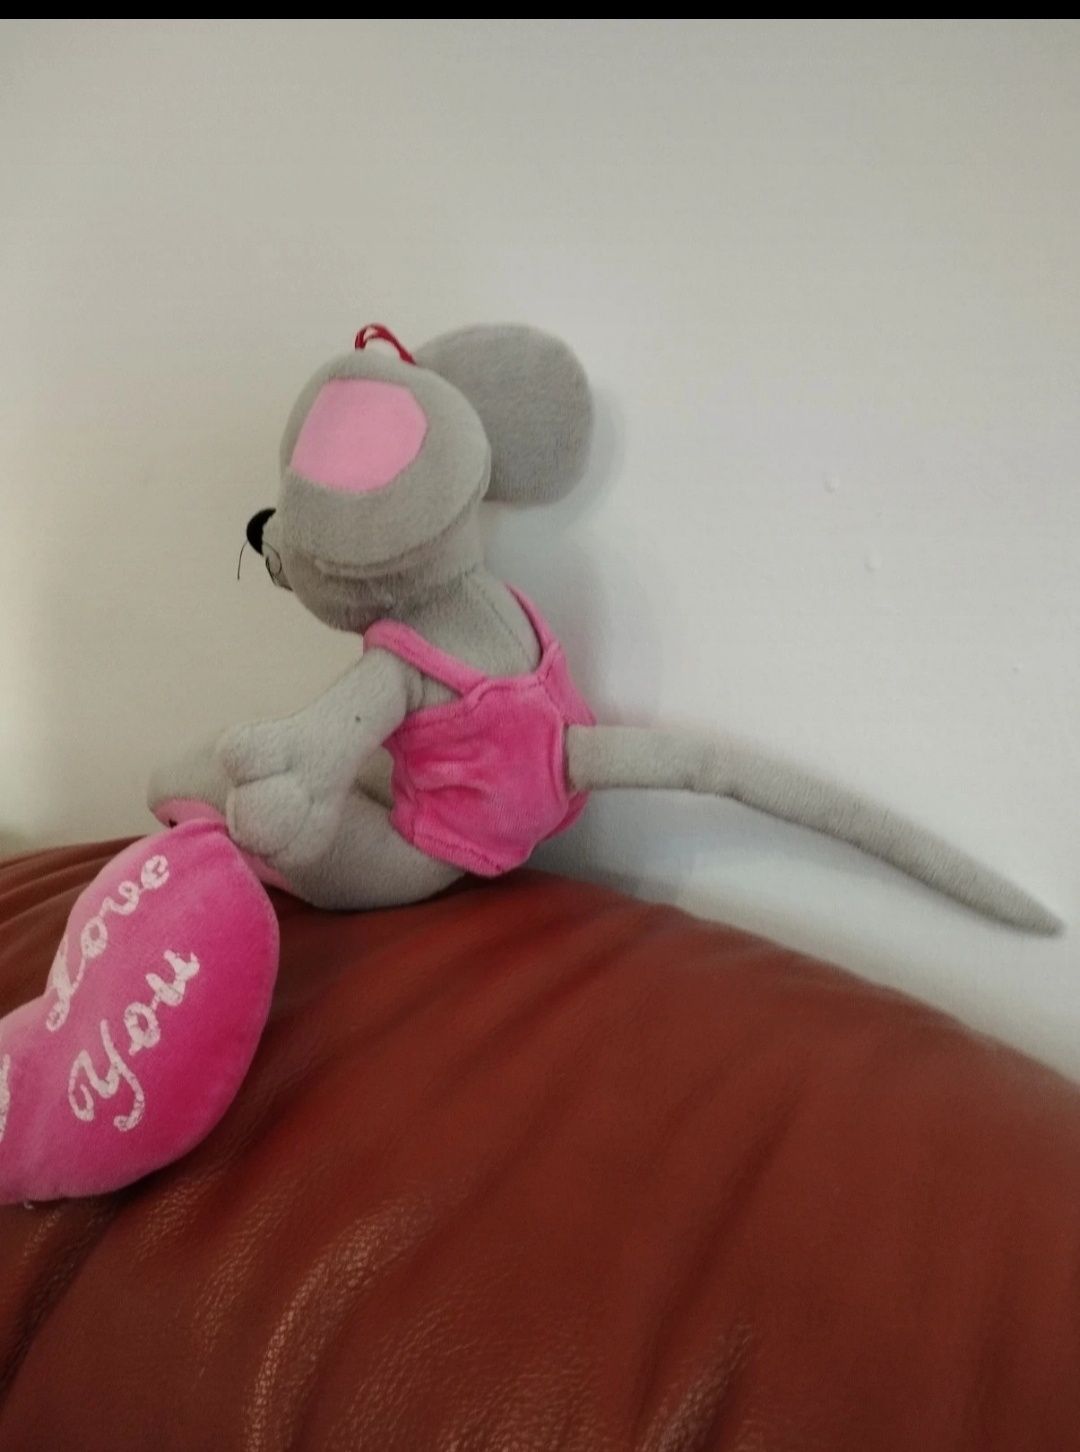 Pluszak mysz różowo szara
Wysokość ok 20 cm